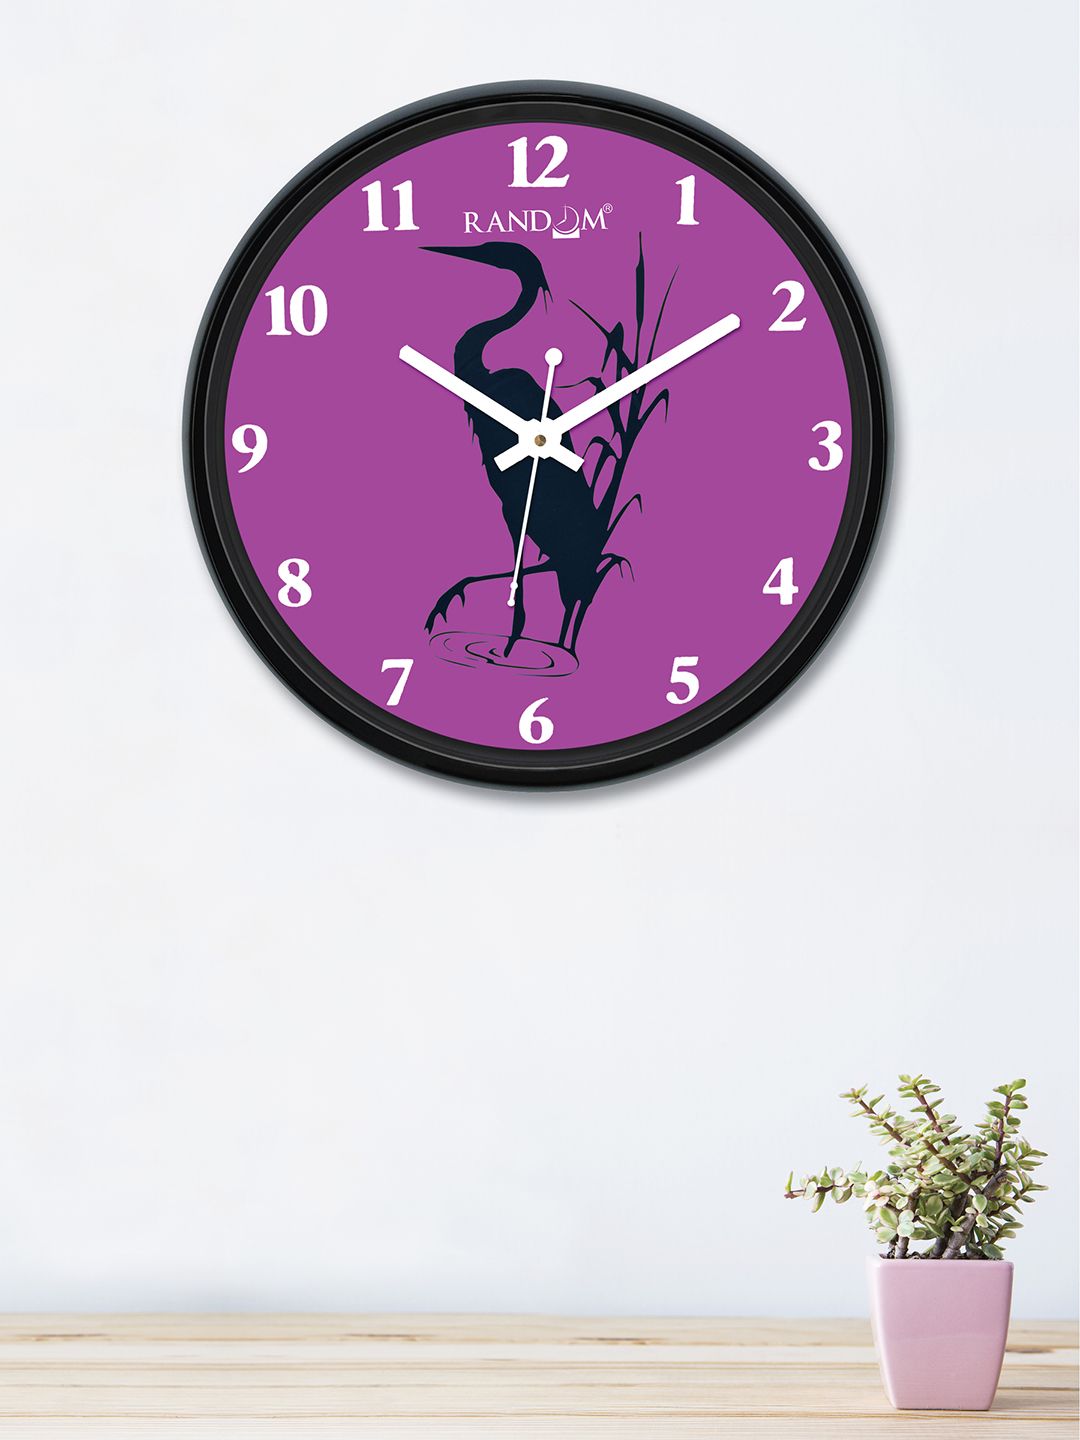 RANDOM Purple & Black Round Printed 30 cm Analogue Wall Clock Price in India